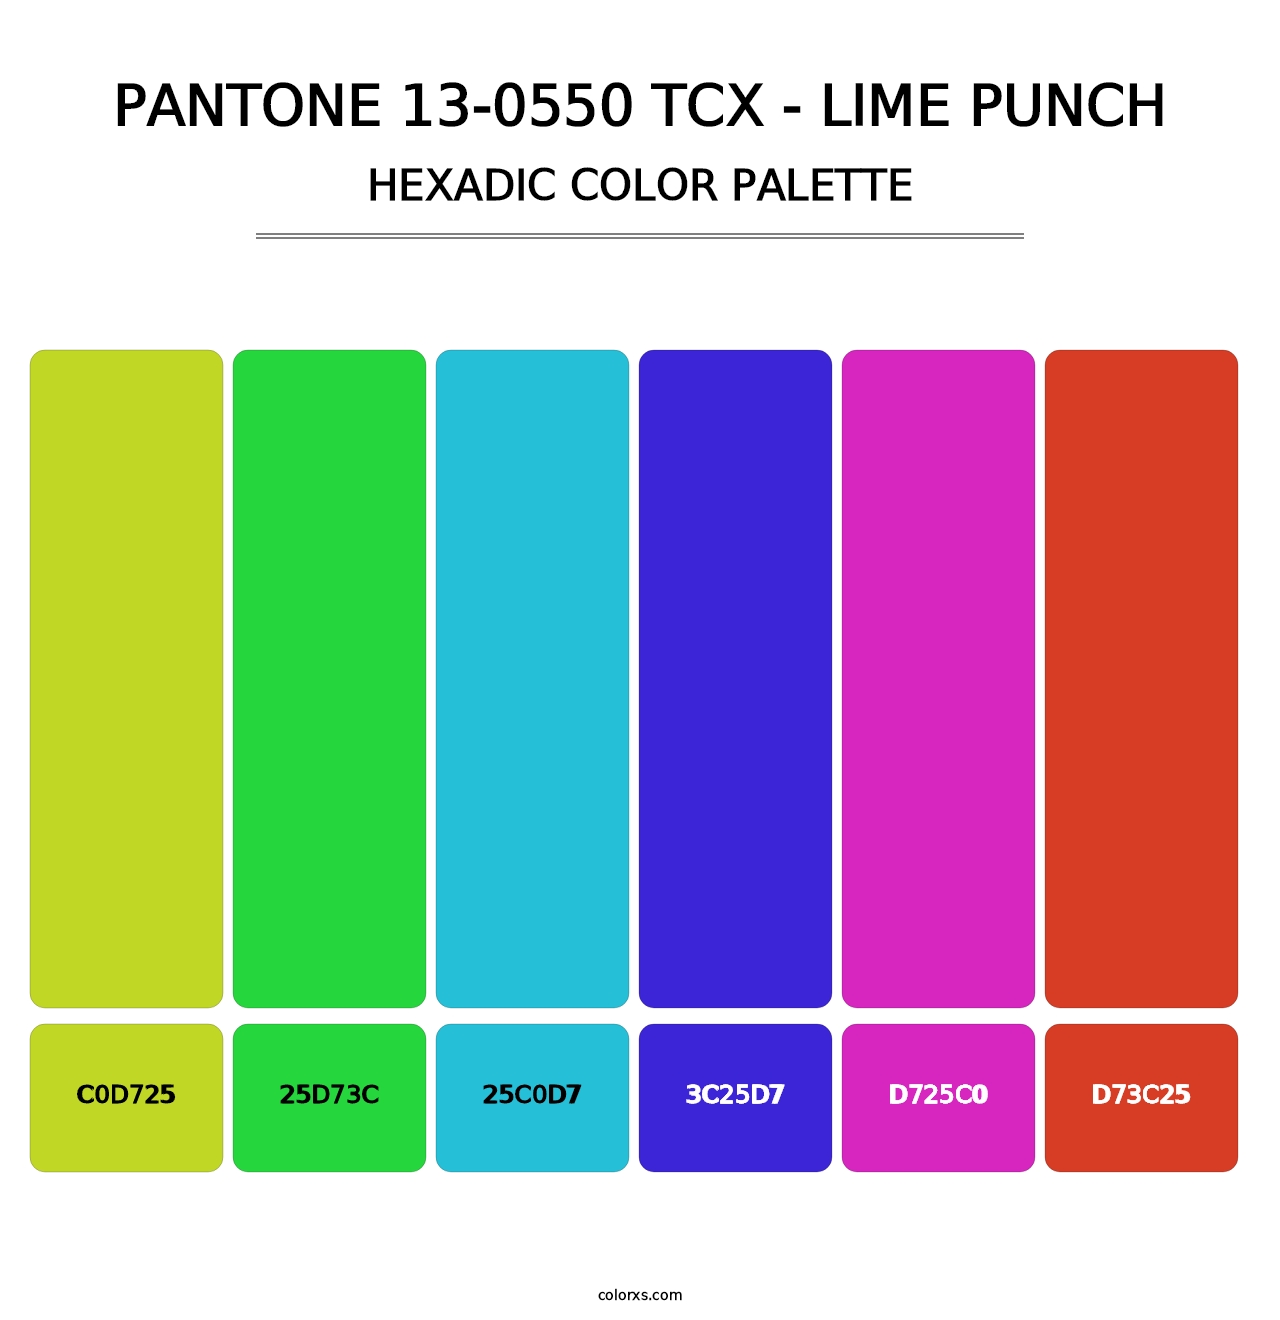 PANTONE 13-0550 TCX - Lime Punch - Hexadic Color Palette